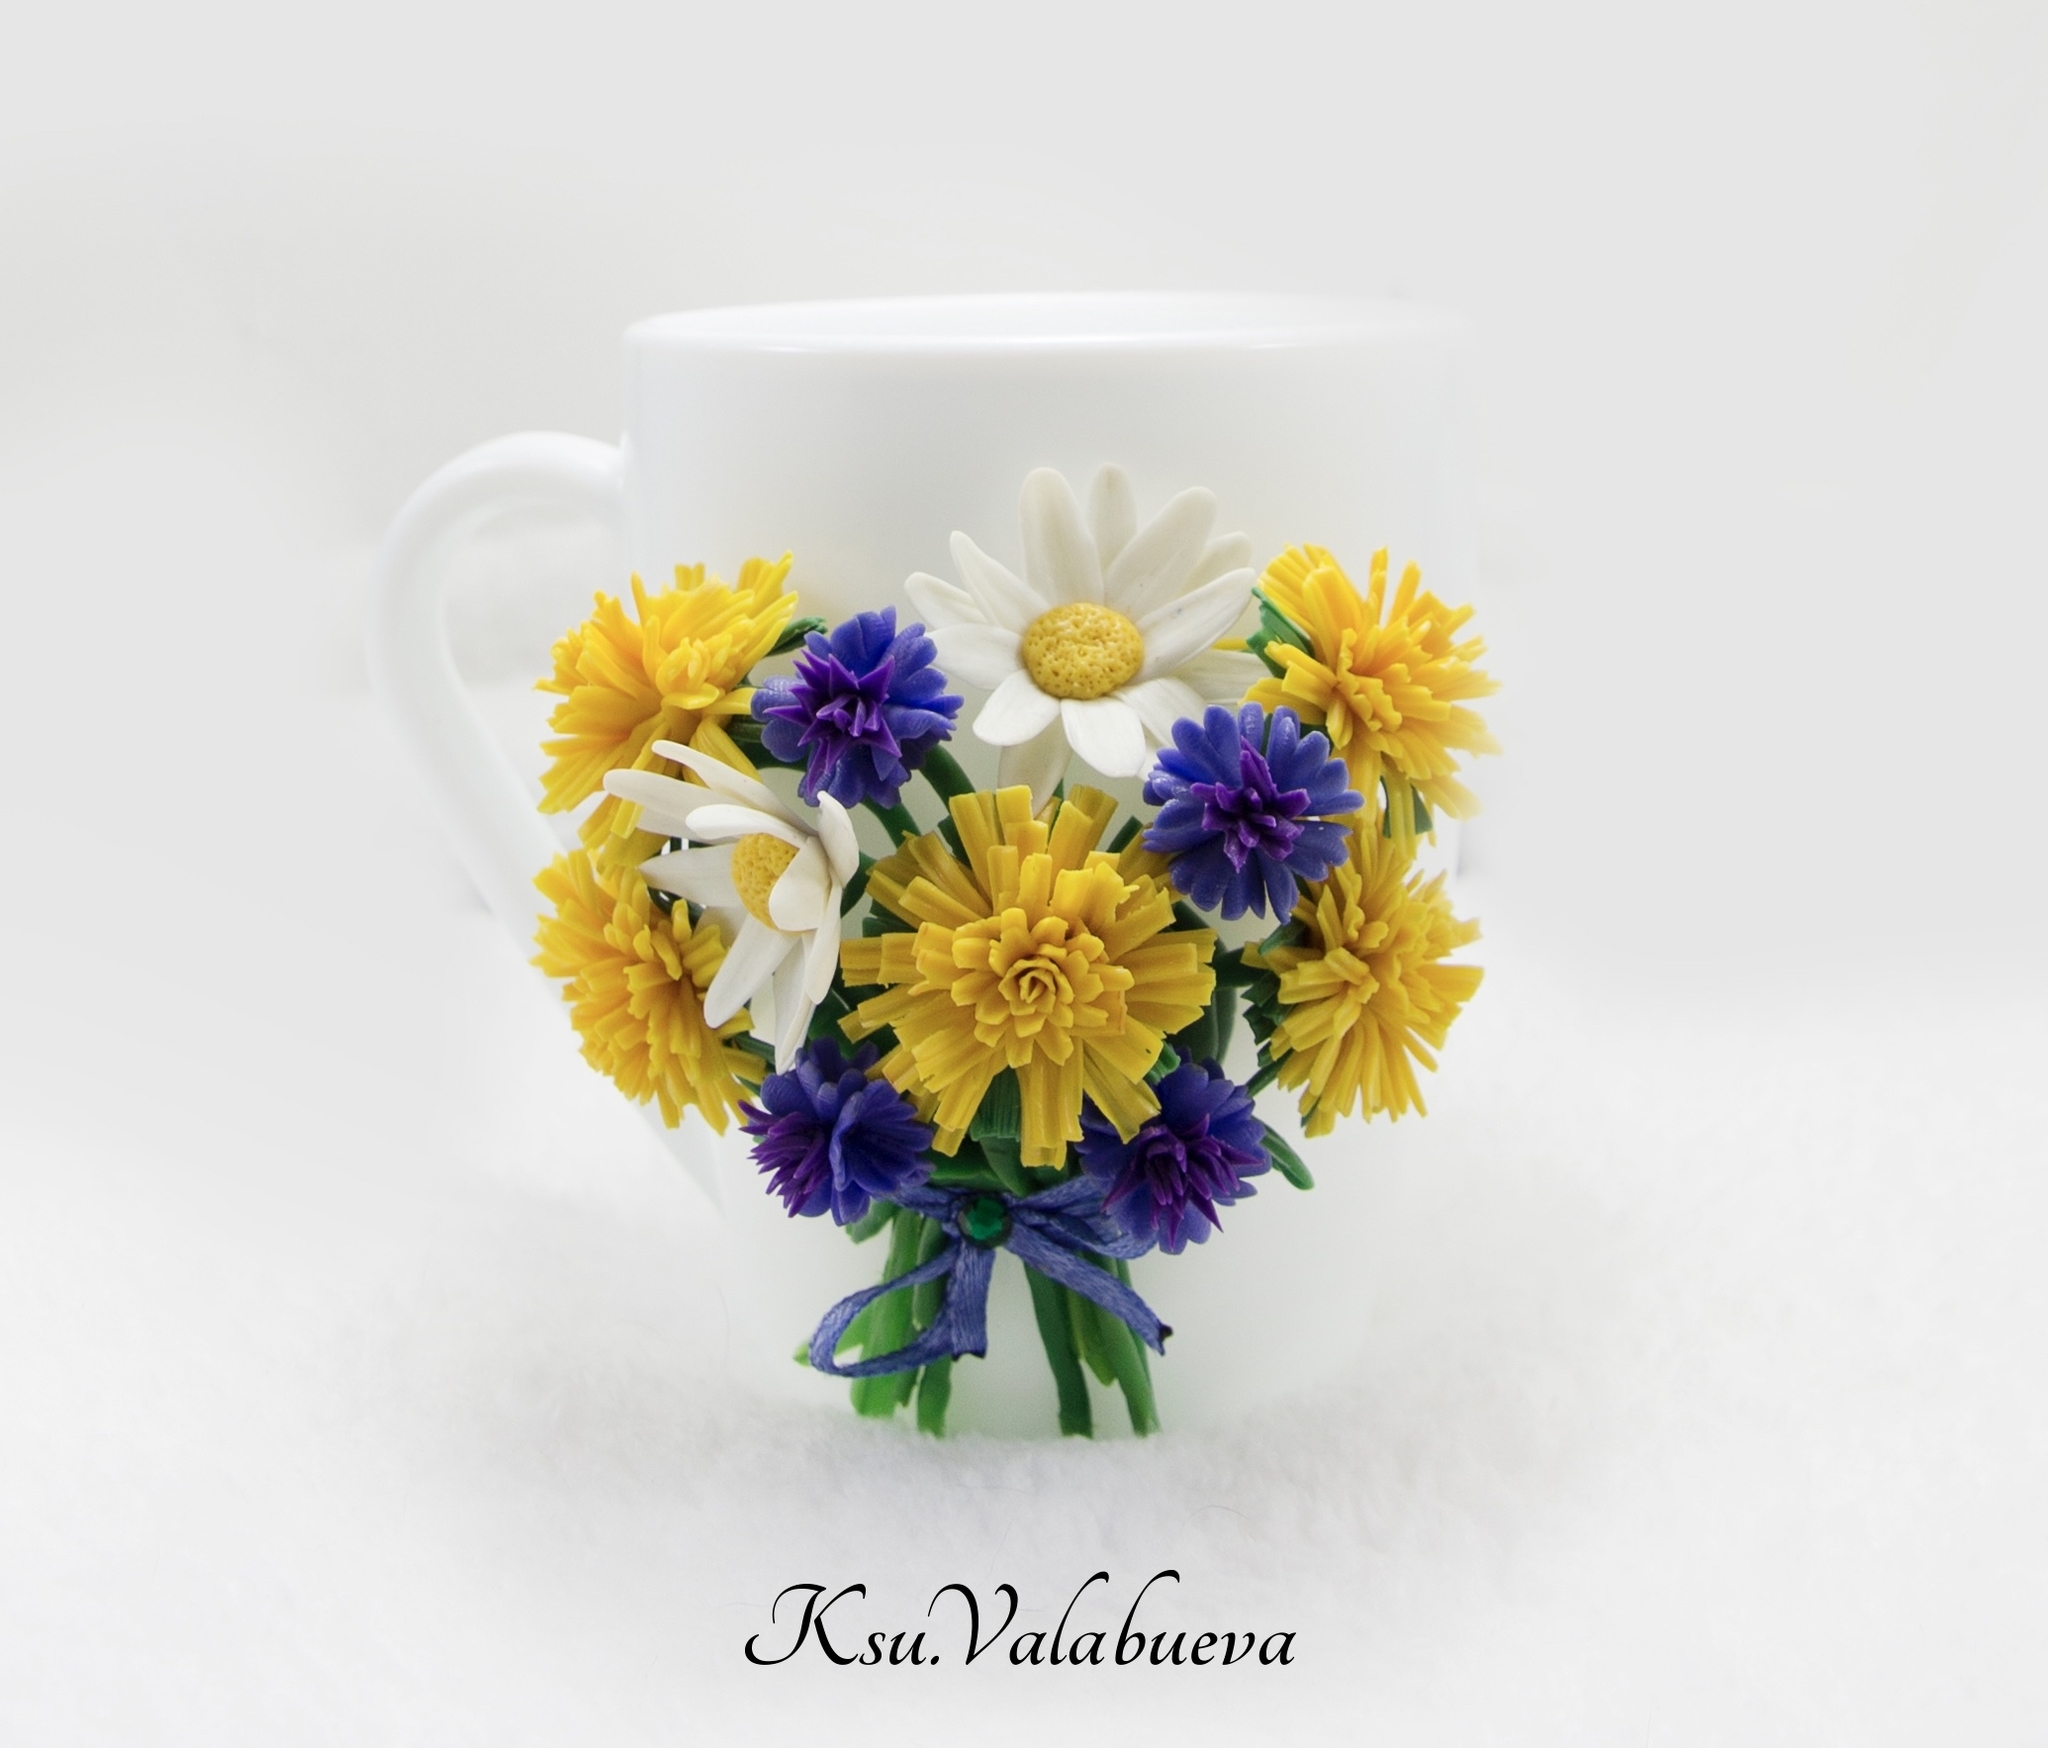 Парящая чашка с цветами - 72 фото